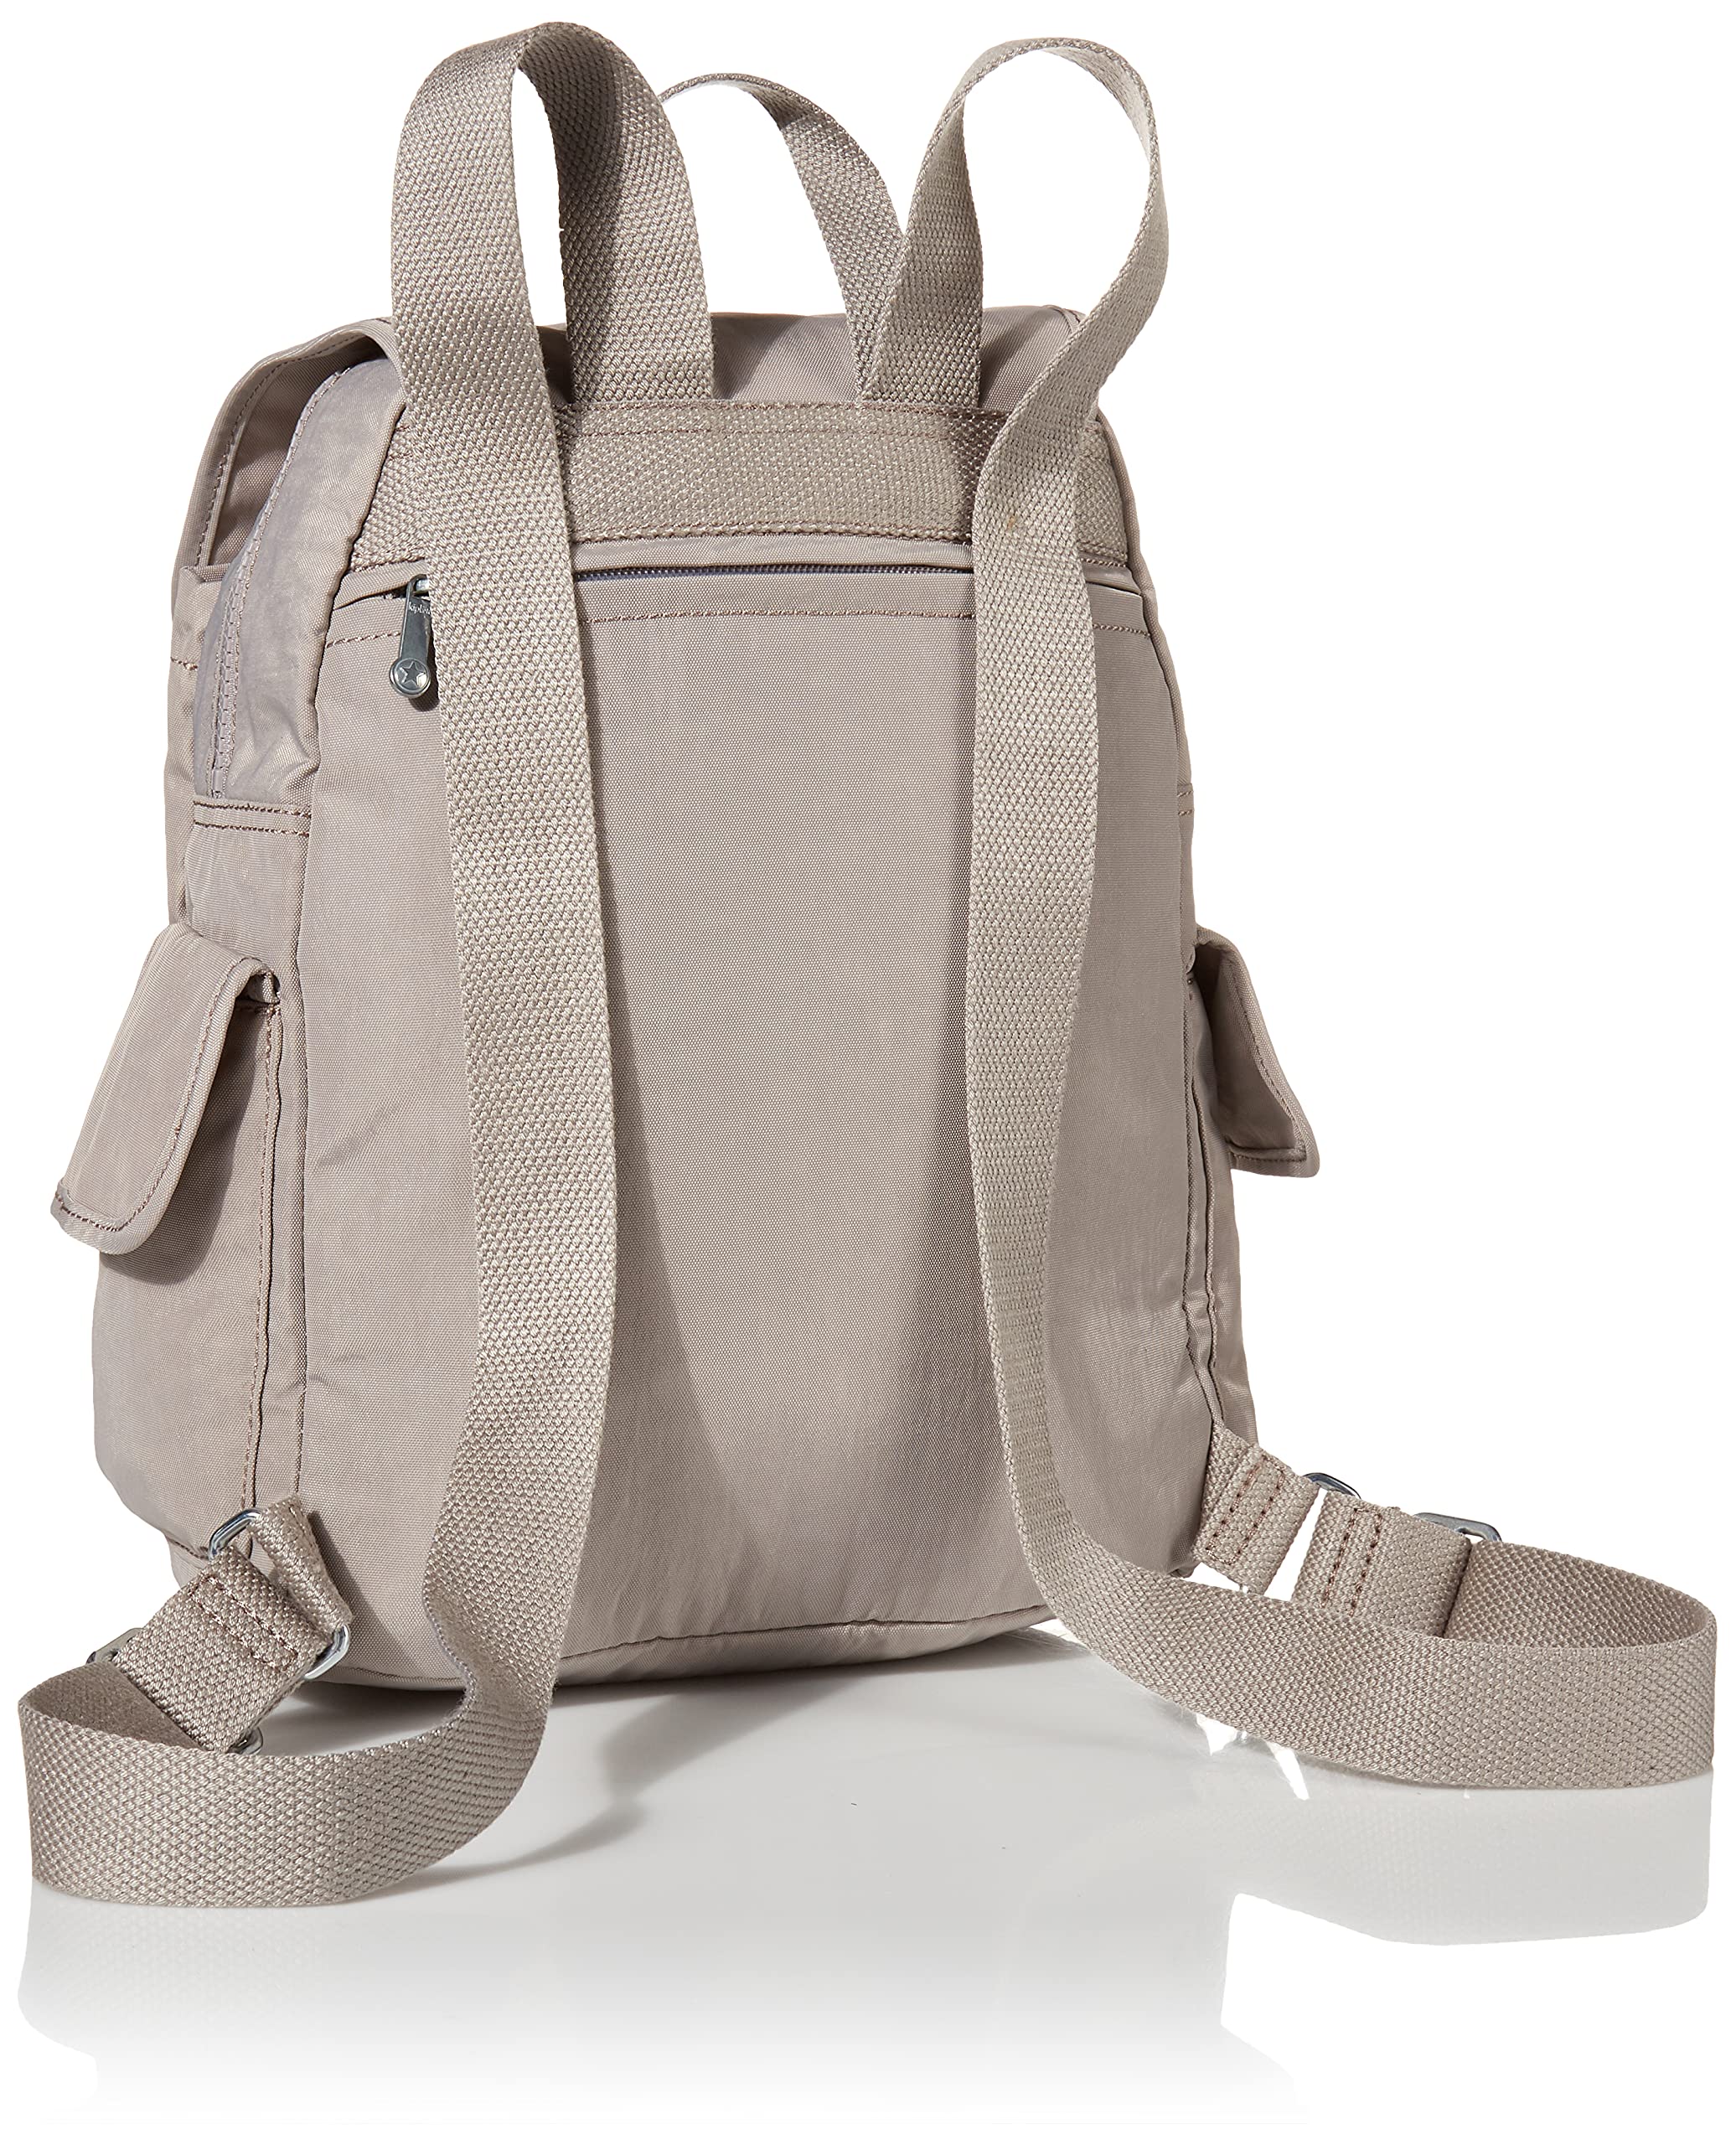 Kipling Women's City Pack Small Backpack, Lightweight Versatile Daypack, Bag, Grey Gris